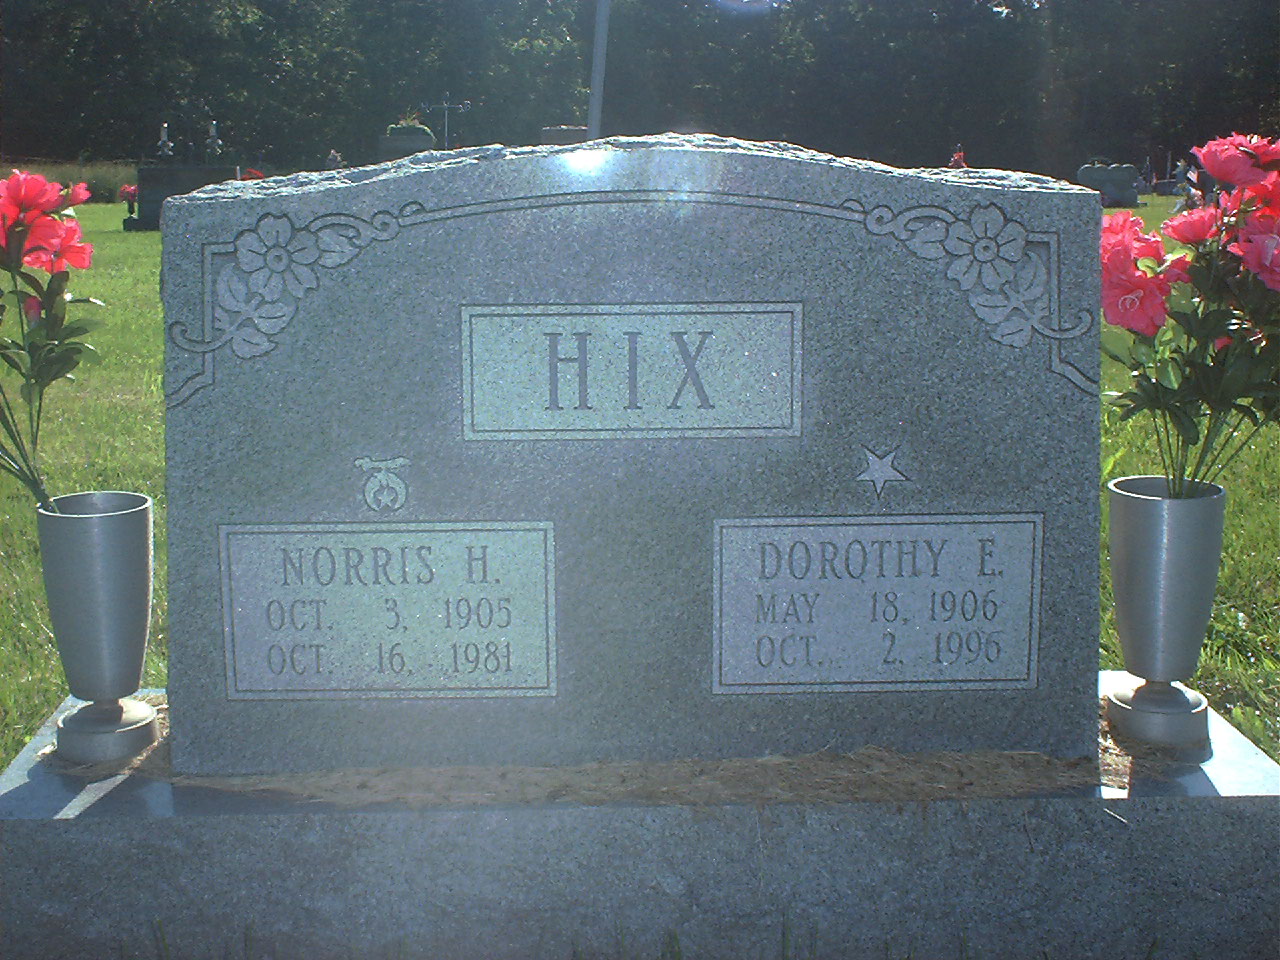 Norris H. Hix headstone